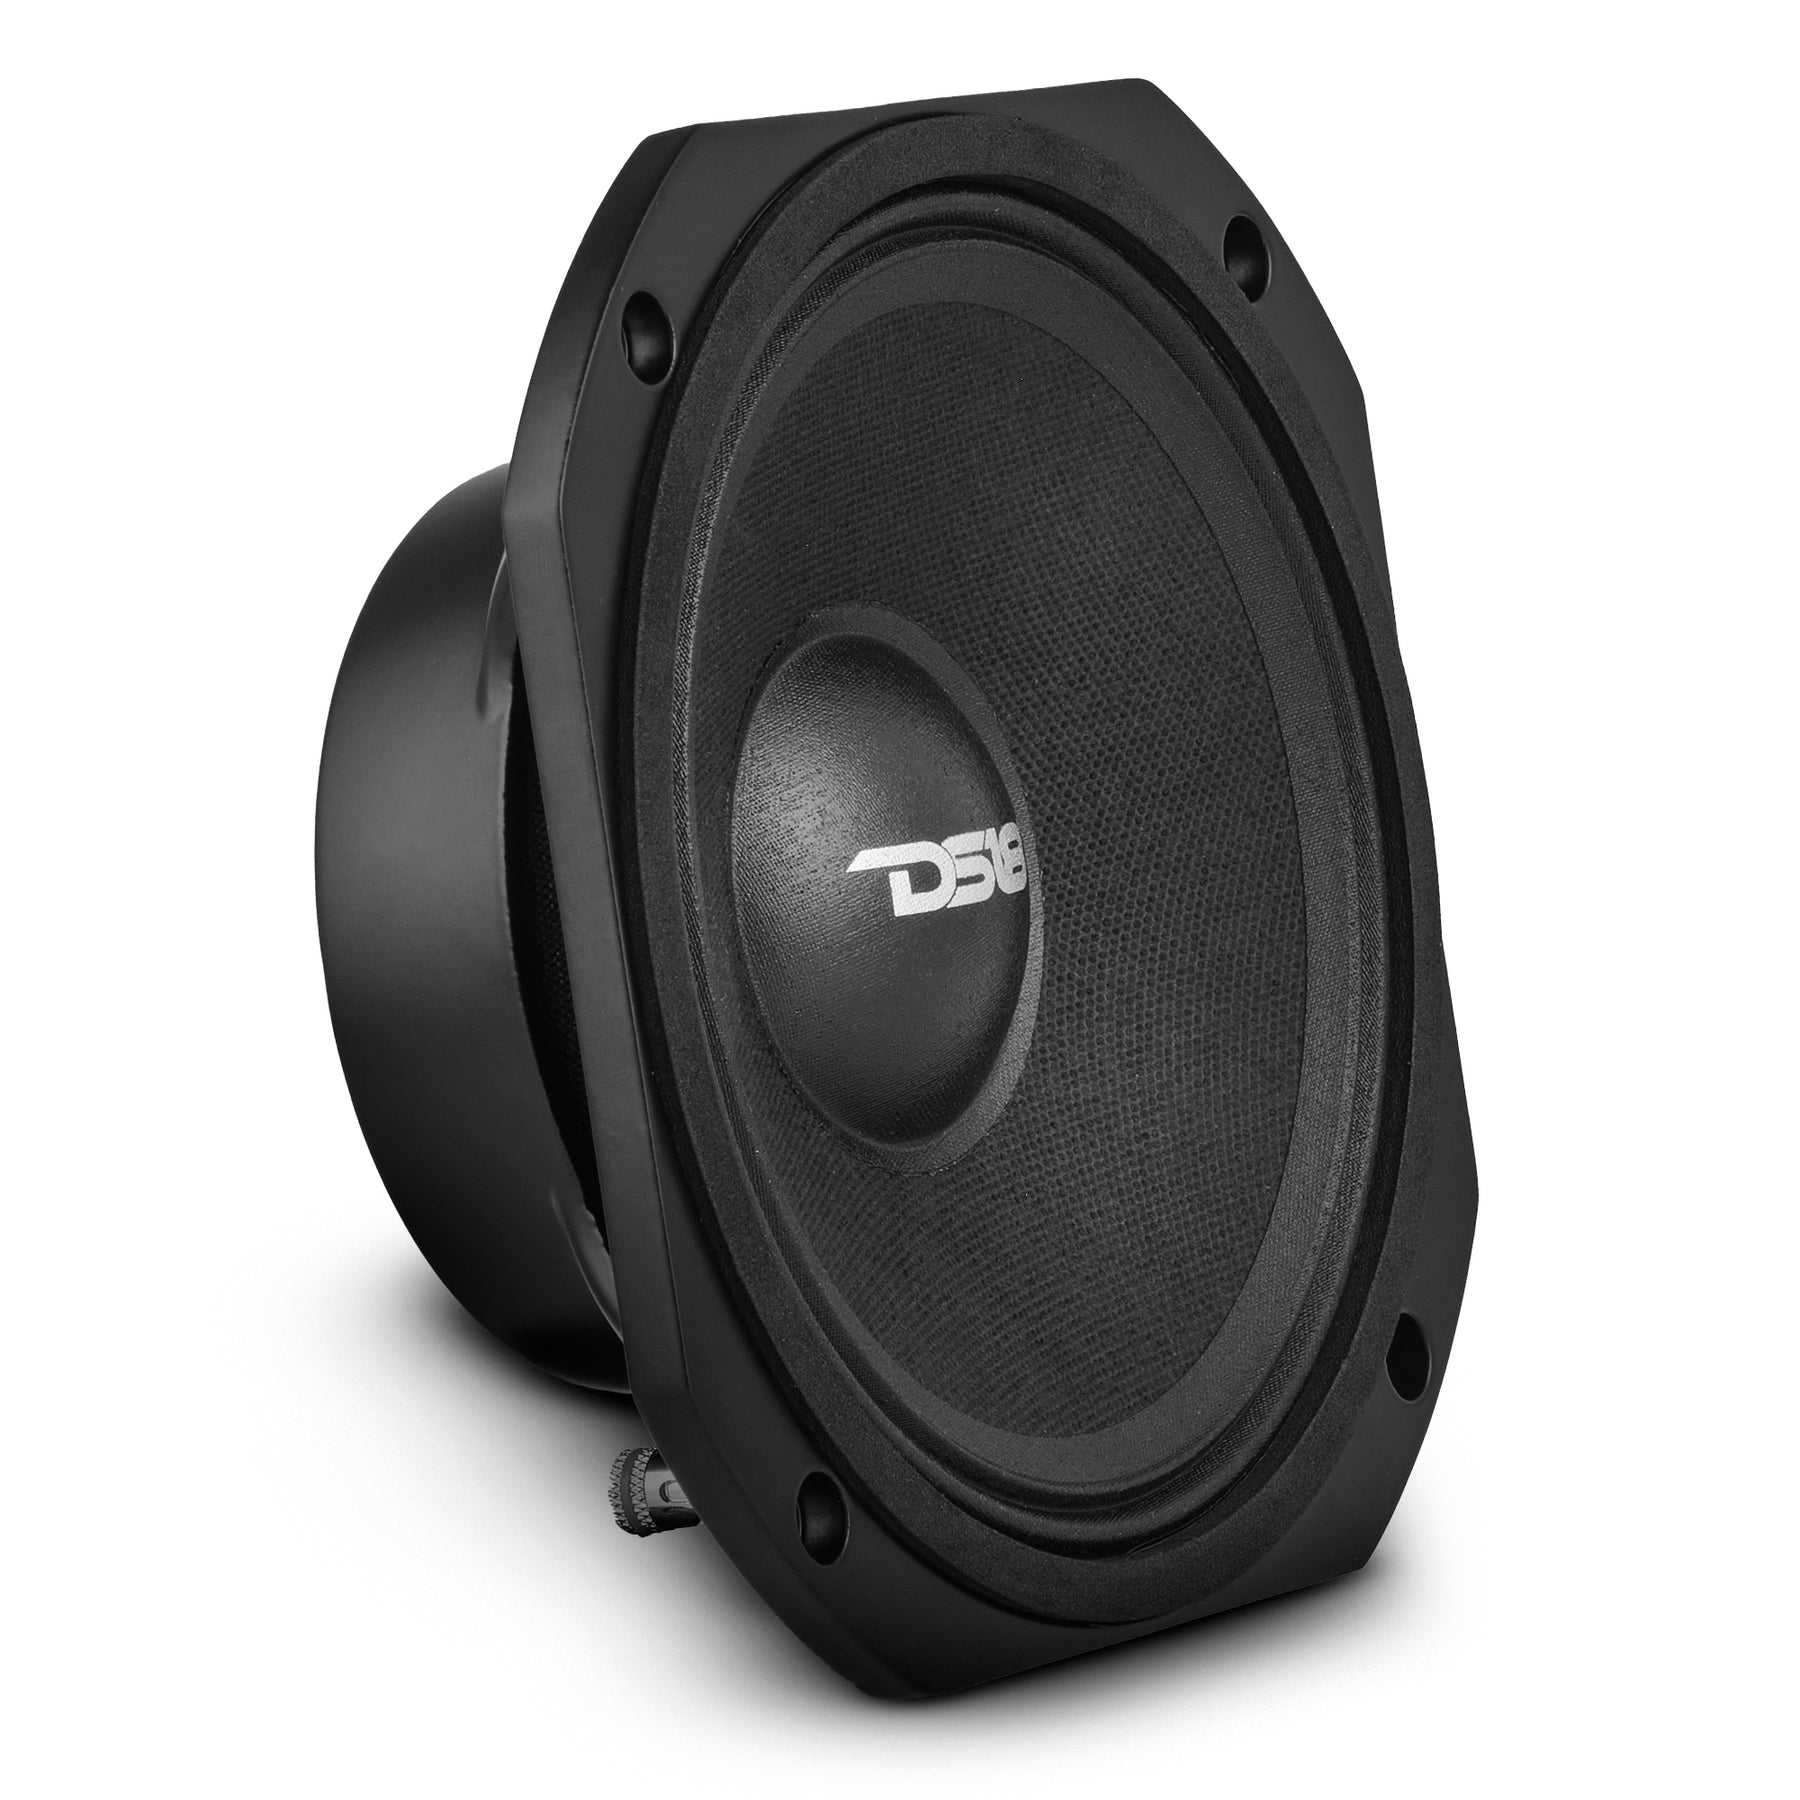 PRO 6.5” Slim Professional Midrange Speaker With Neodymium Magnet For Dome 180 Watts Rms 8-Ohm